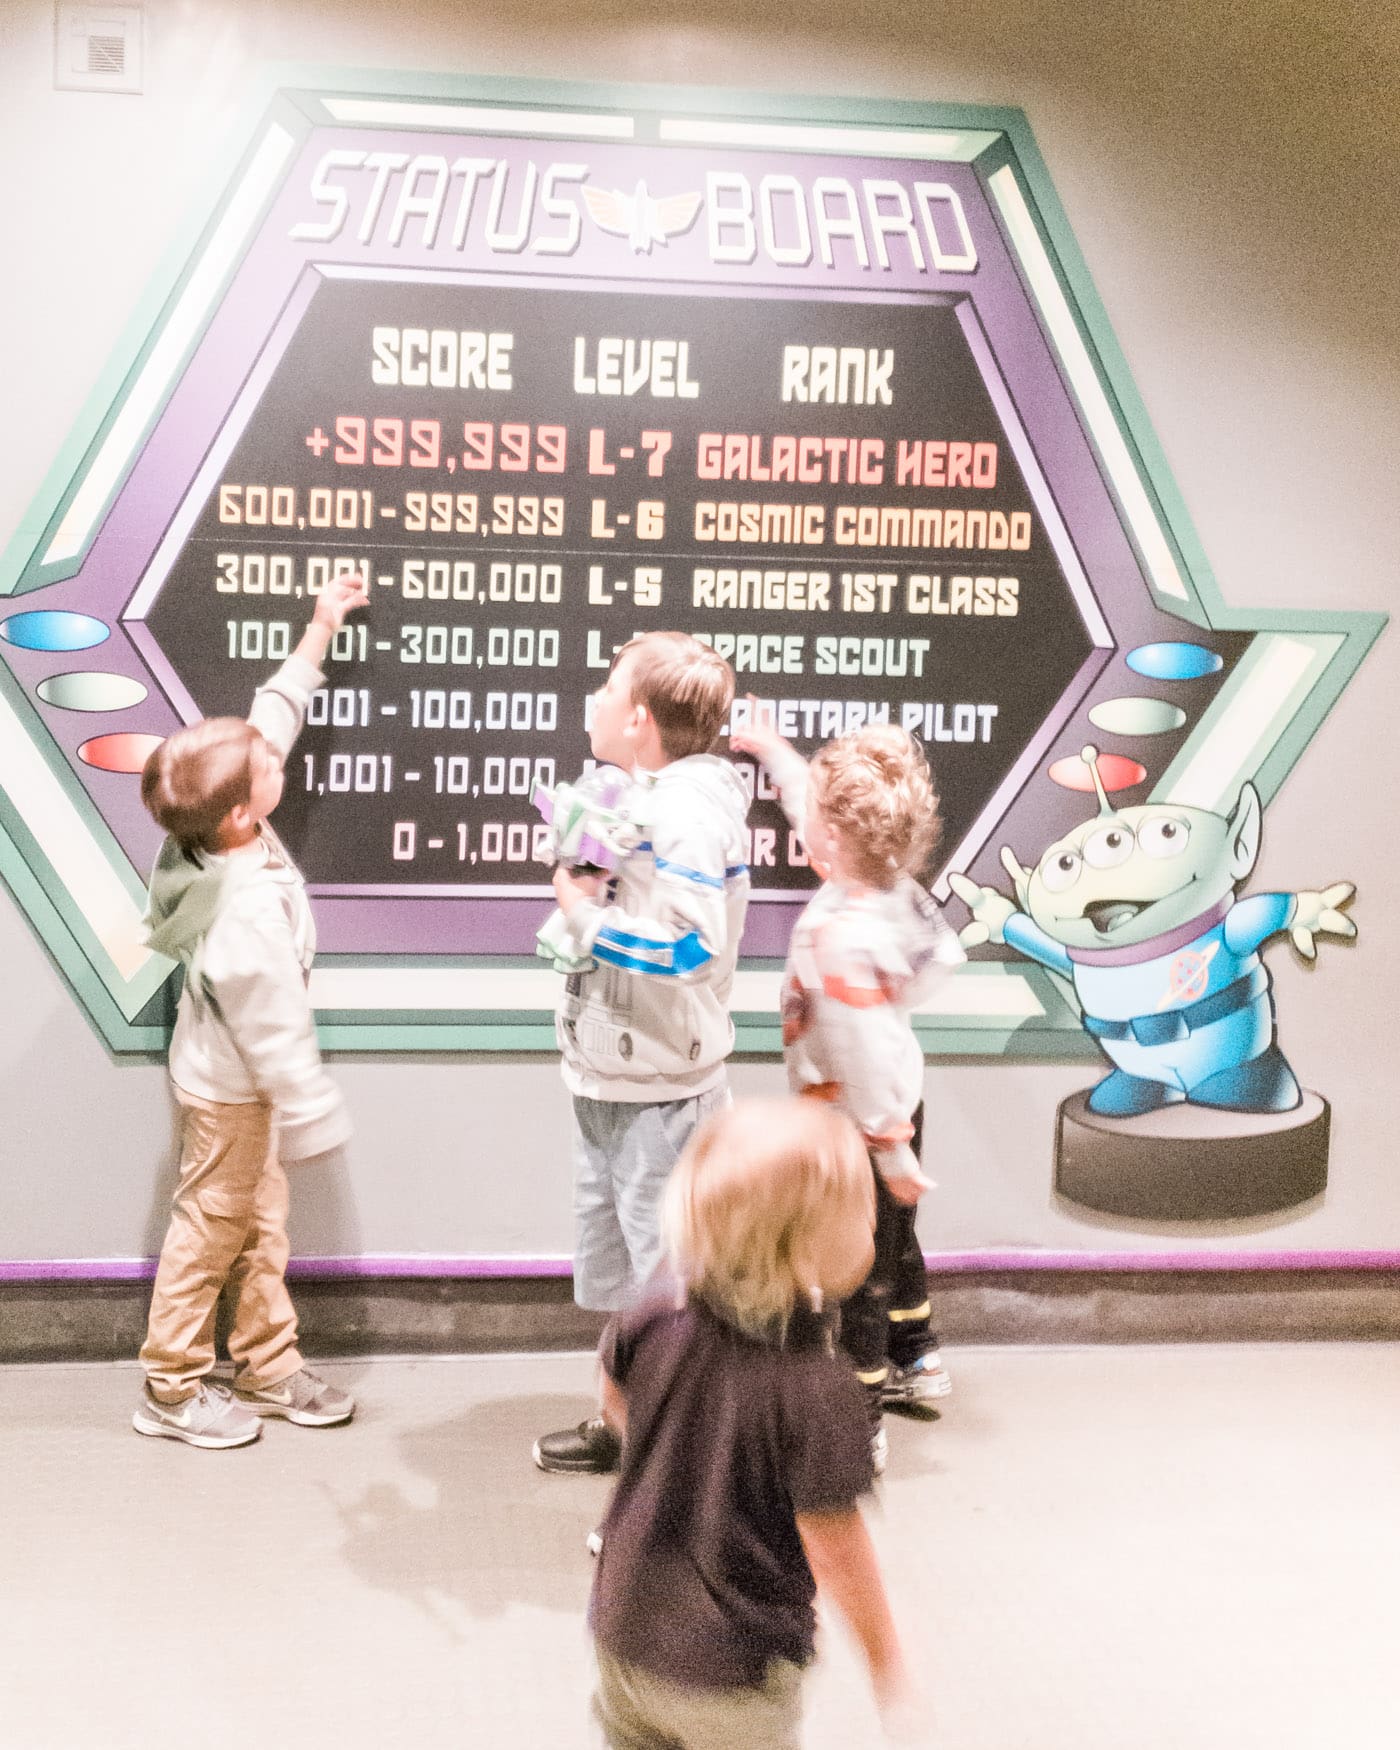 Buzz Lightyear Astro Blasters ride